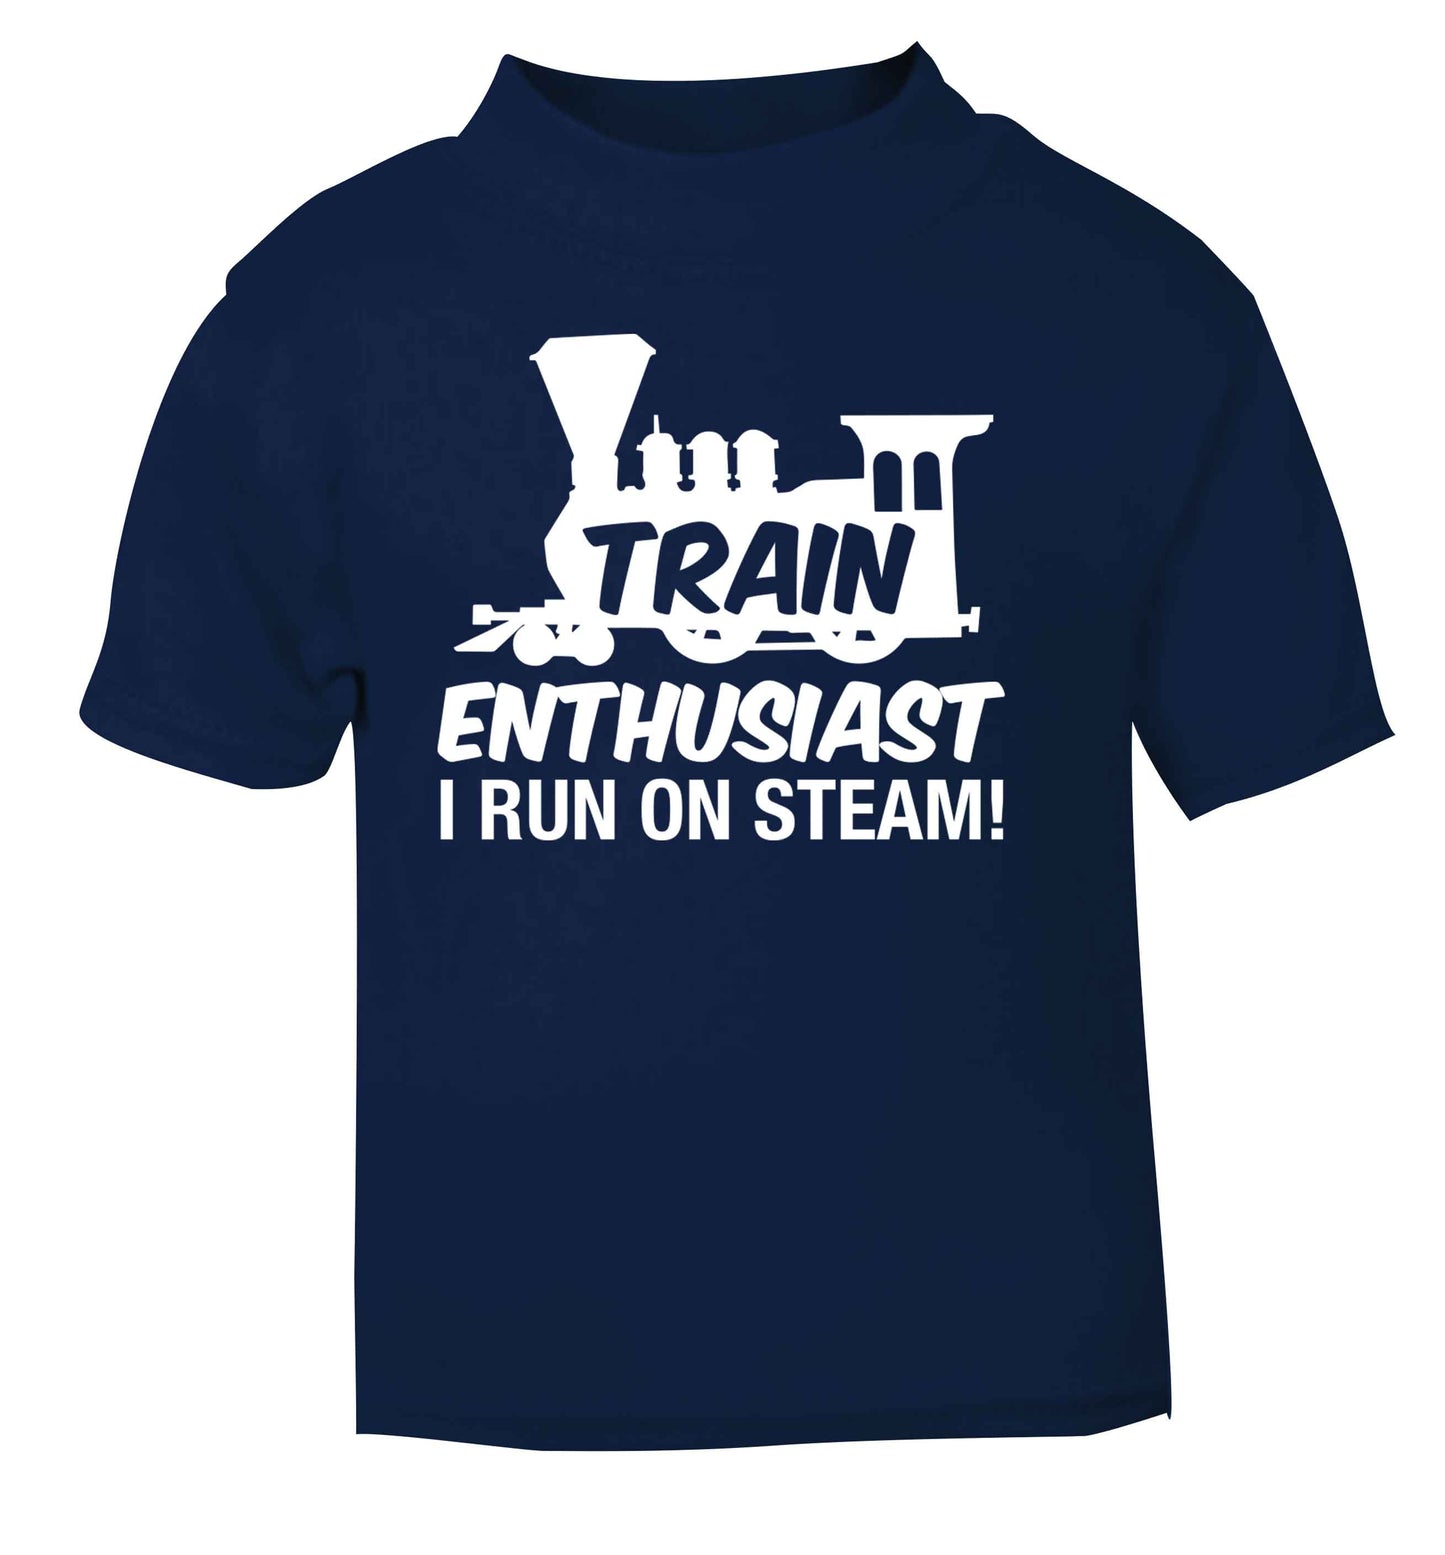 Train enthusiast I run on steam navy Baby Toddler Tshirt 2 Years